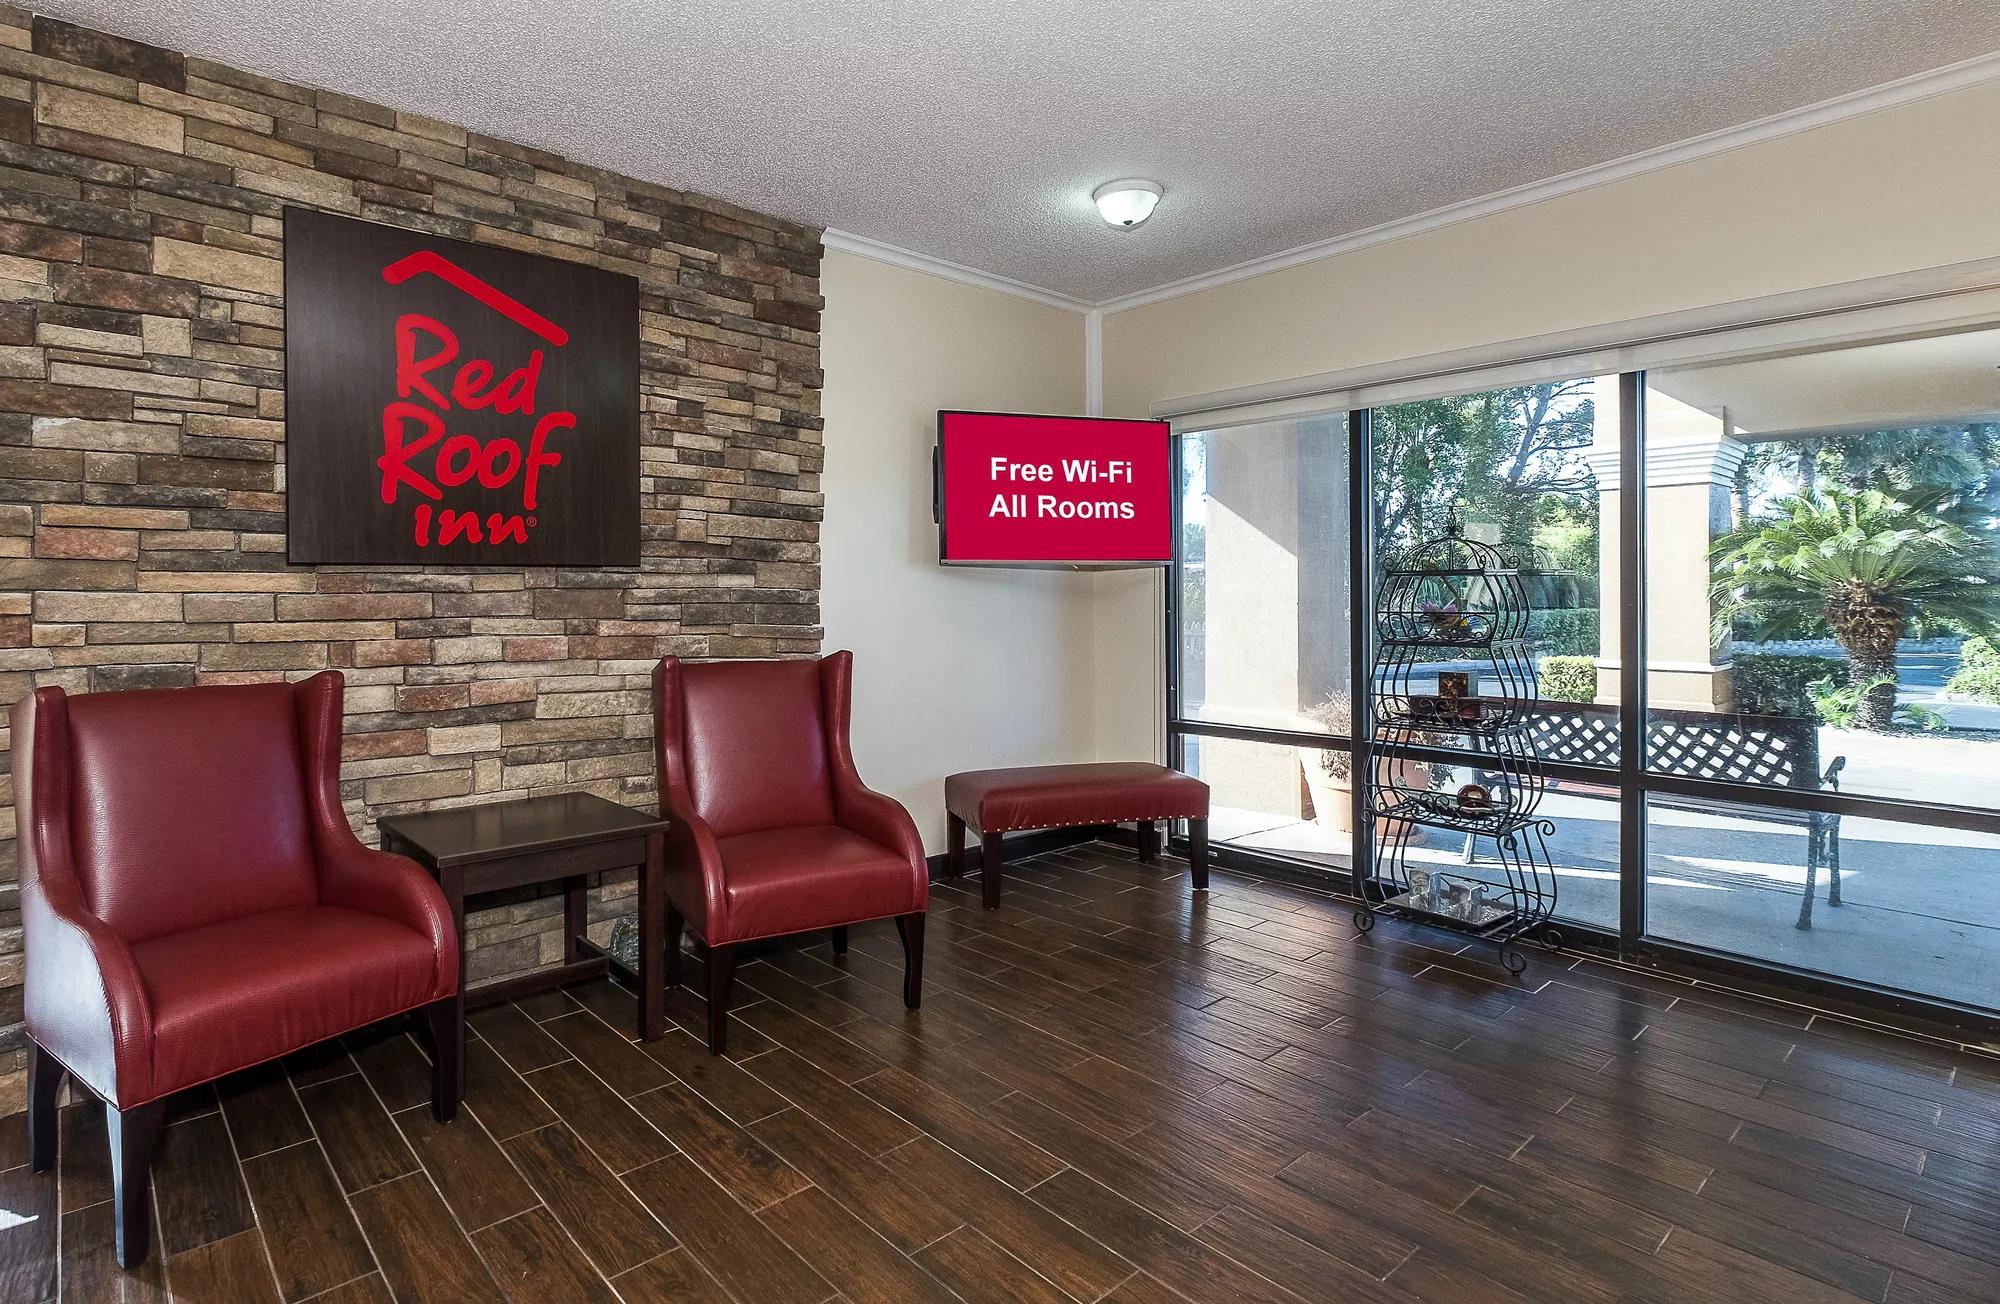 Red Roof Inn Kingsland Lobby Sitting Area Image